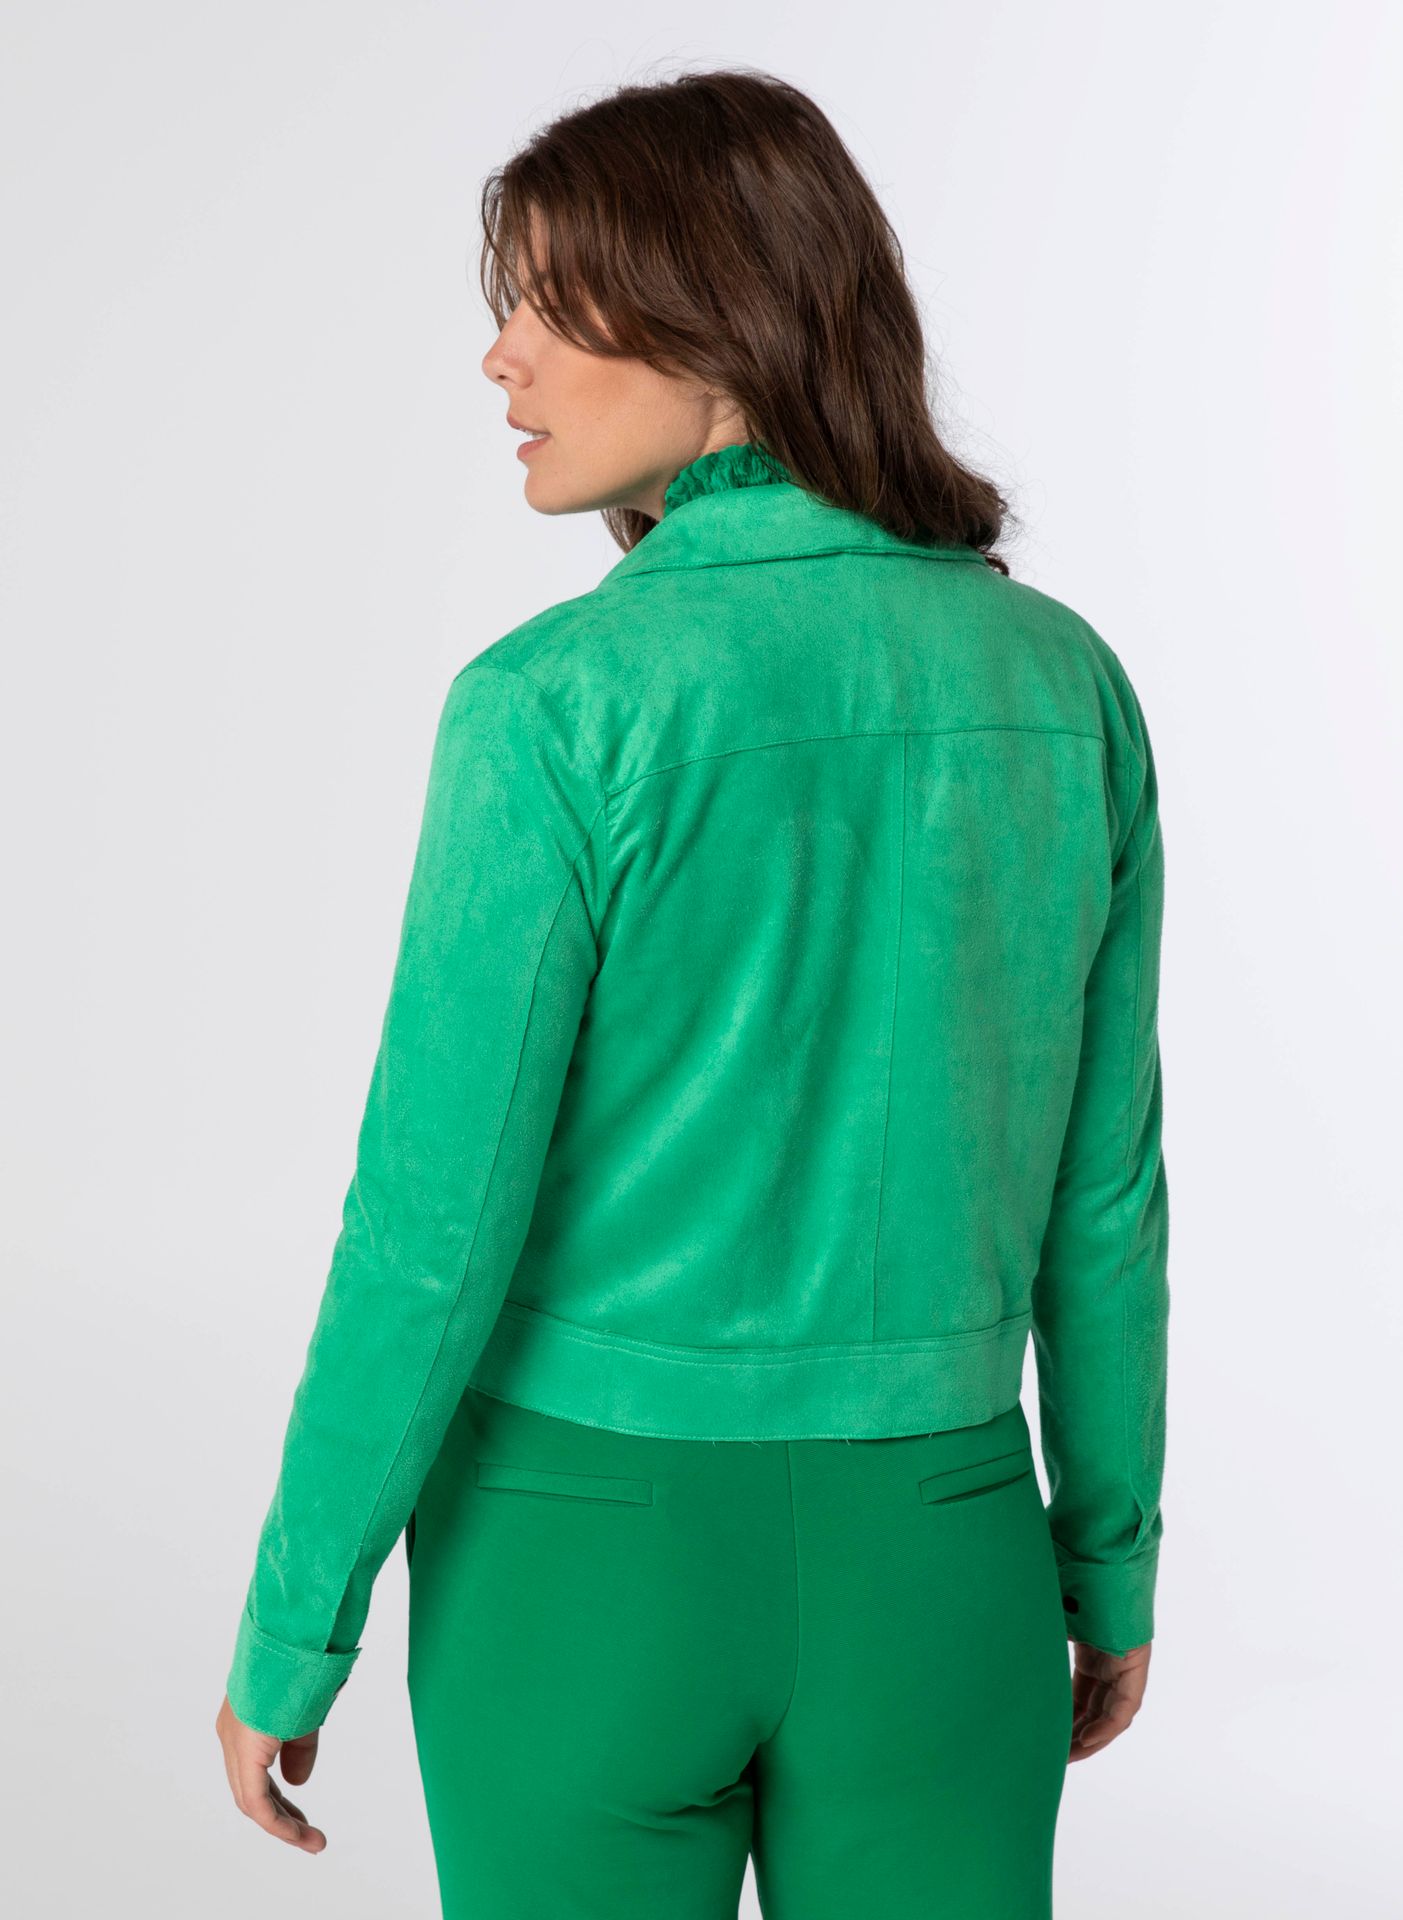 Norah Jacket groen green 213231-500